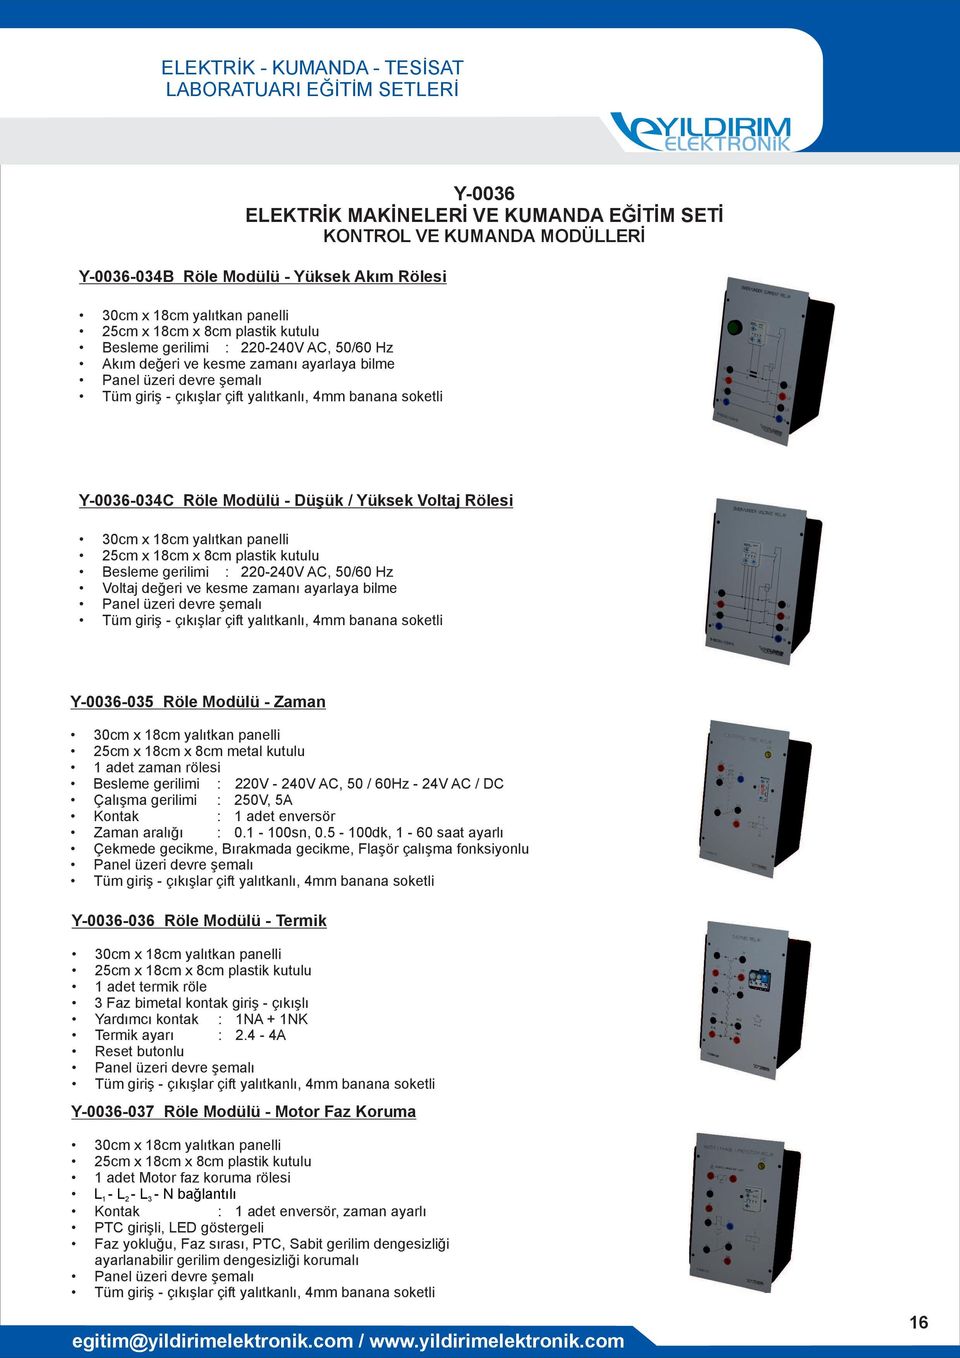 AC, 50 / 60Hz - 24V AC / DC Çalışma gerilimi : 250V, 5A Kontak : 1 adet enversör Zaman aralığı : 0.1-100sn, 0.